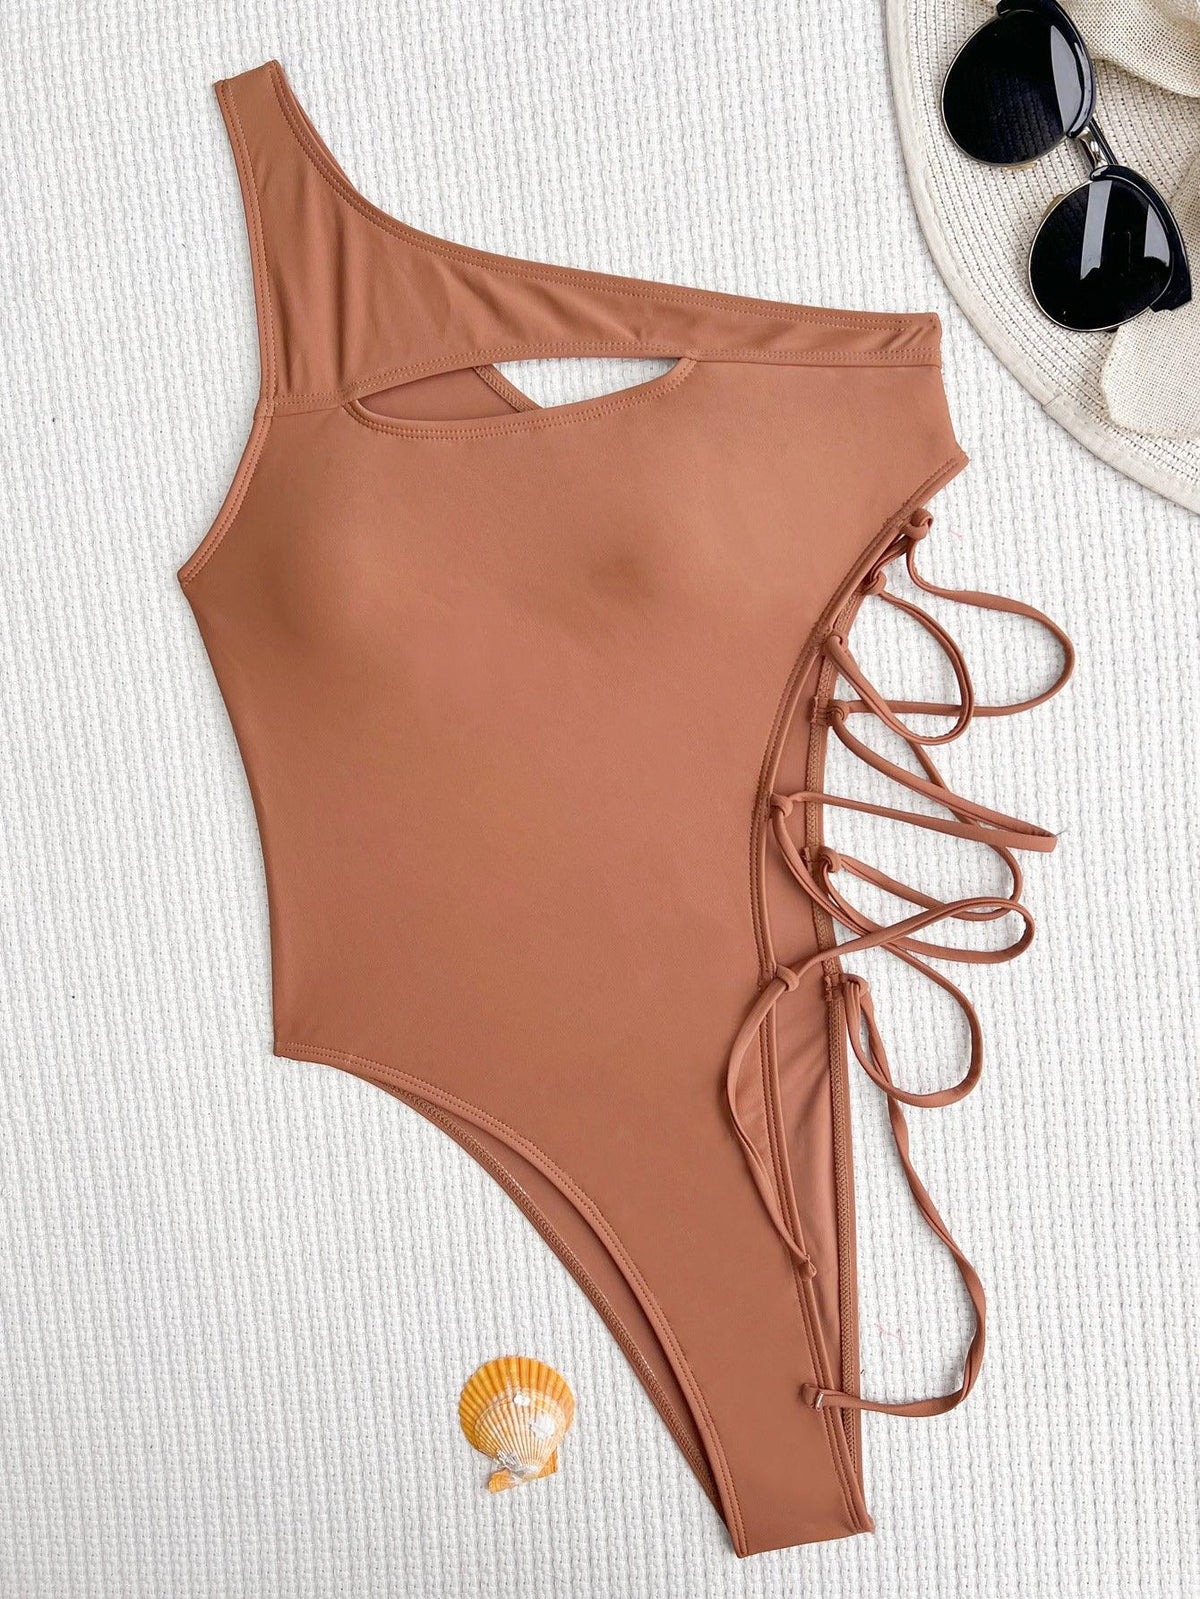 Women's One-Shoulder One-Piece Swimsuit - Chic Designer Swimwear by GFIT - GFIT SPORTS